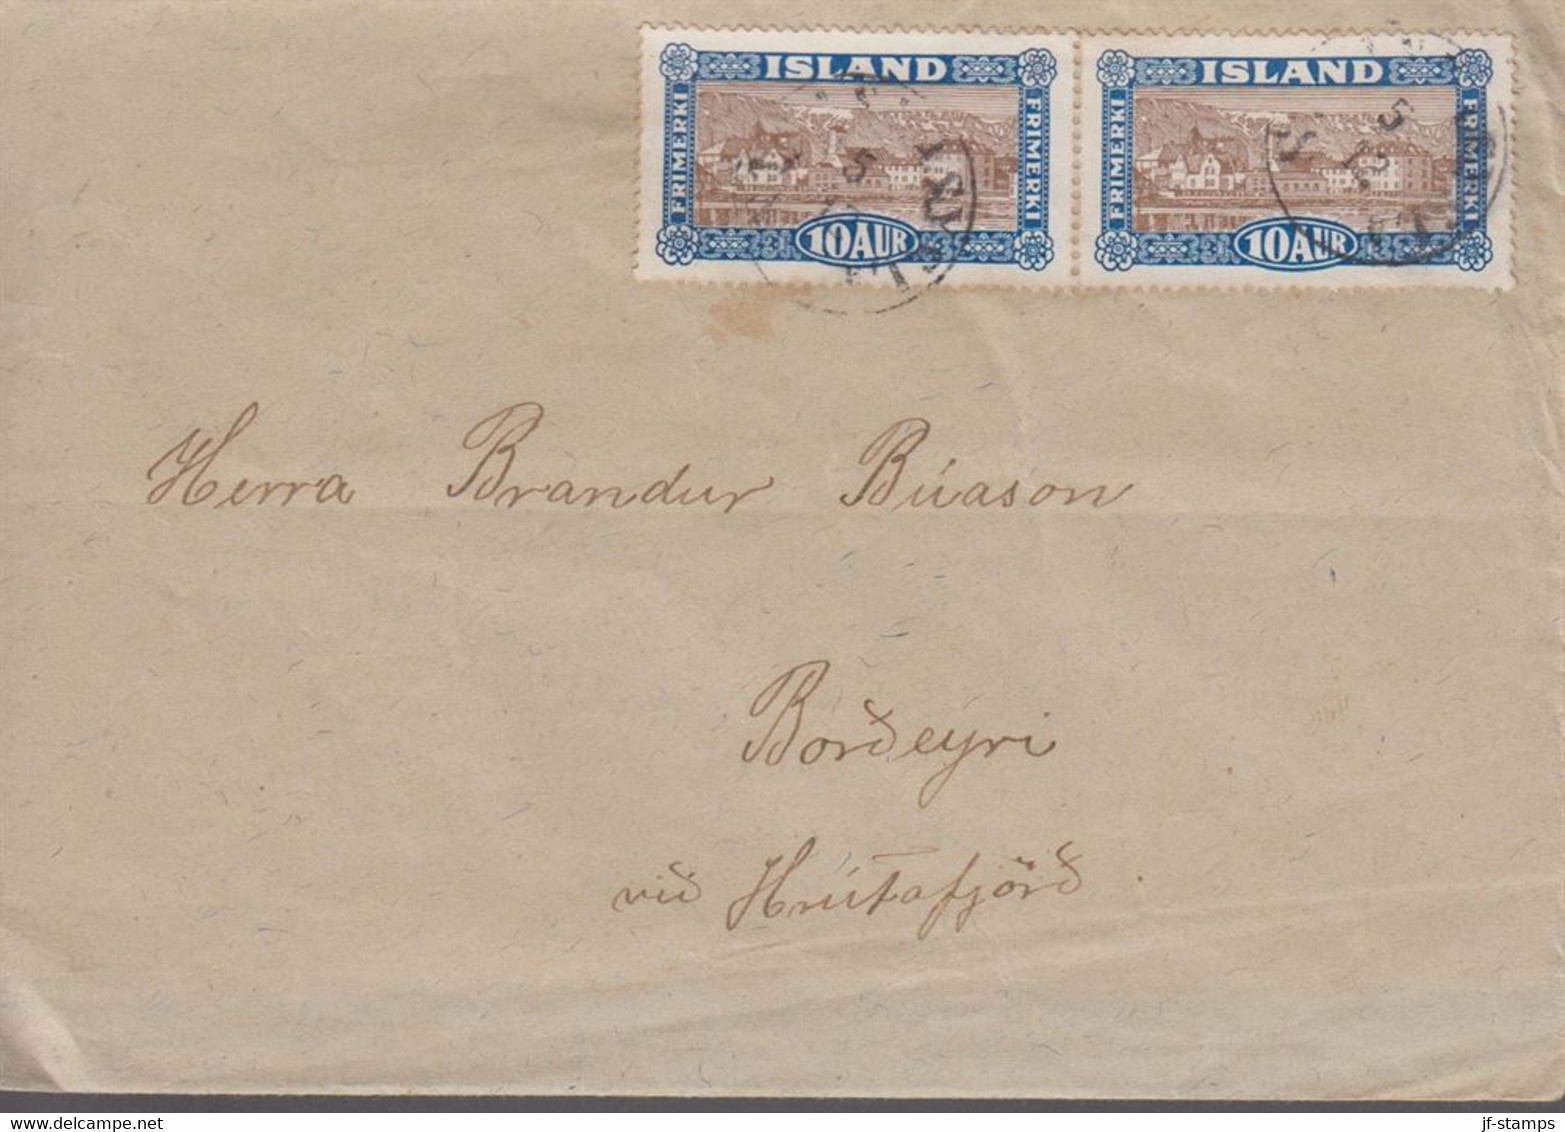 1925. Views And Buildings. 10 Aur Brown/blue 2 Ex STRANDASYSLA 5 12. (Michel 115) - JF366949 - Covers & Documents